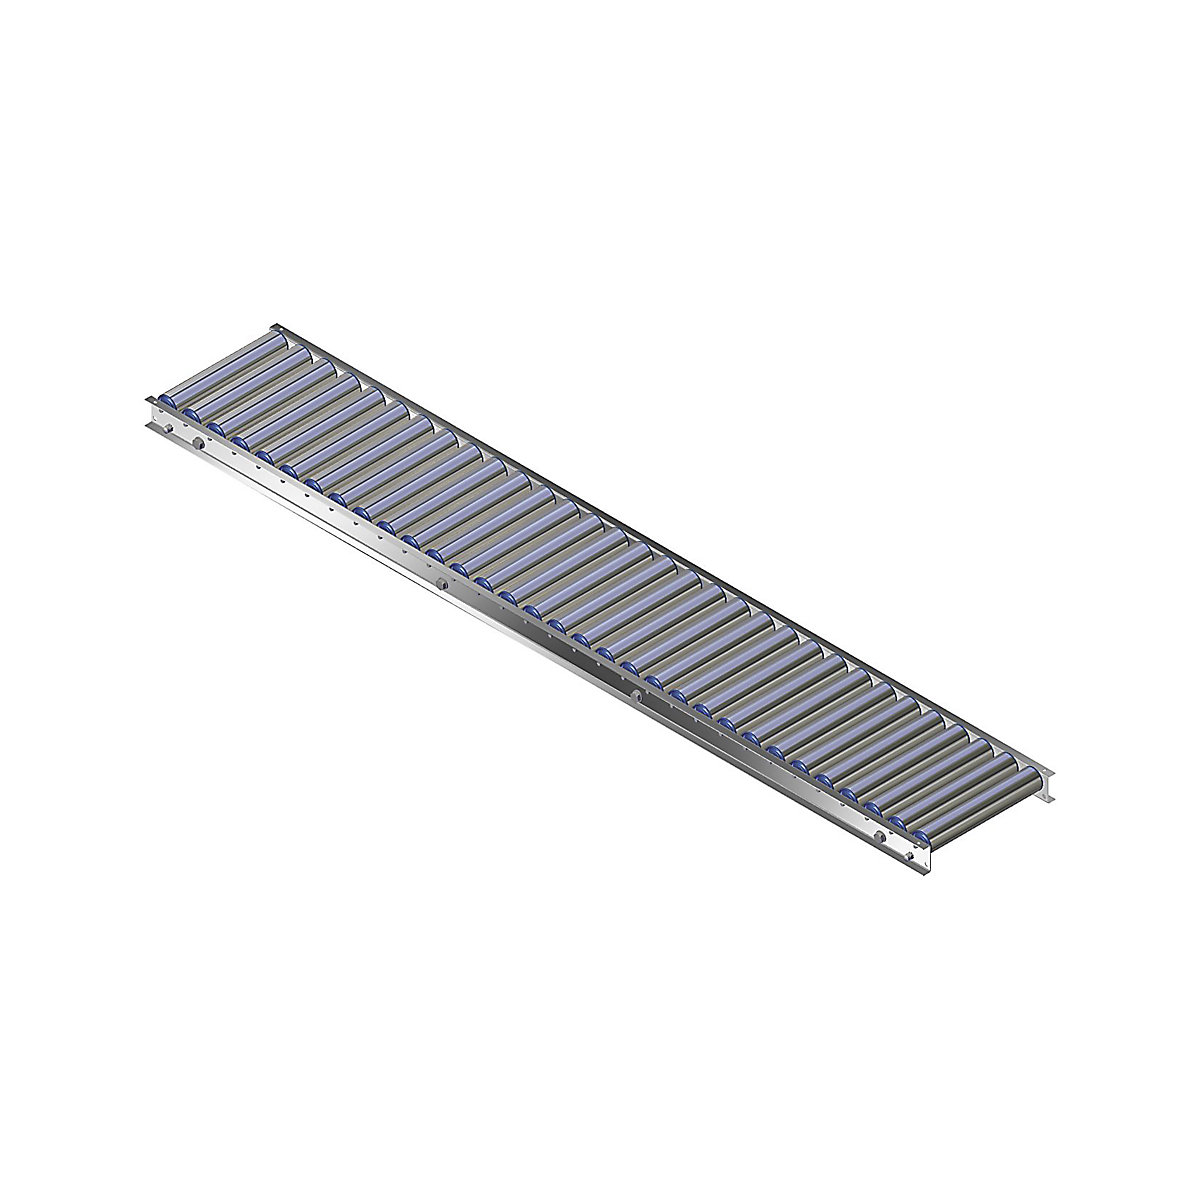 Gura – Light duty roller conveyor, aluminium frame with aluminium rollers, track width 300 mm, axle spacing 62.5 mm, length 2.0 m